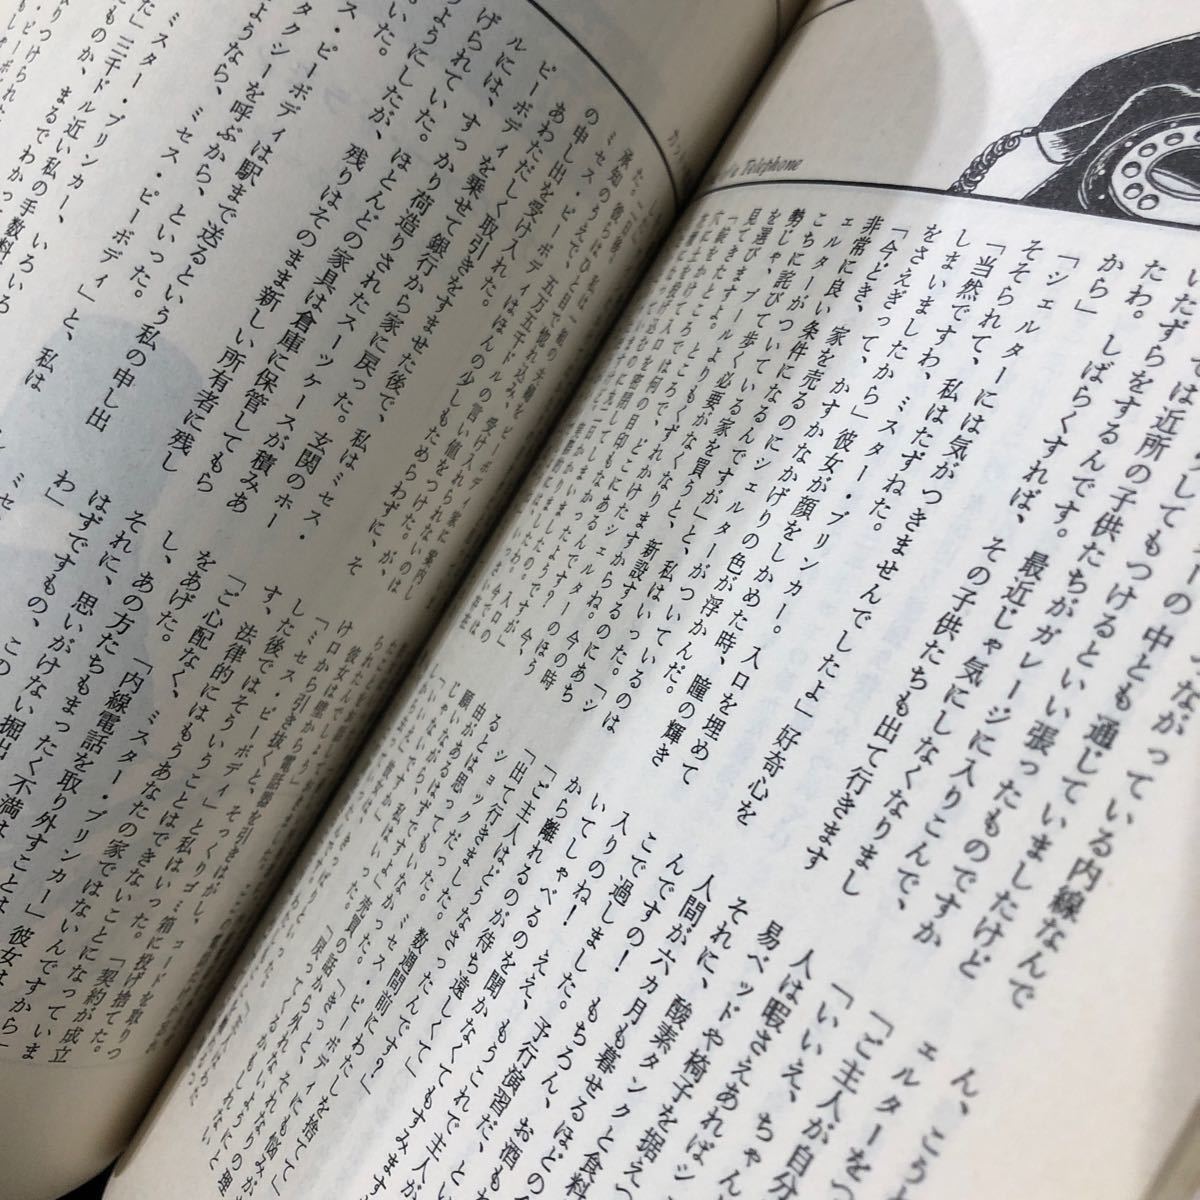 ne78 mistake teli magazine 1979 year 2 month number . river bookstore Showa era 54 year novel literary art thought history economics essay genuine article language 